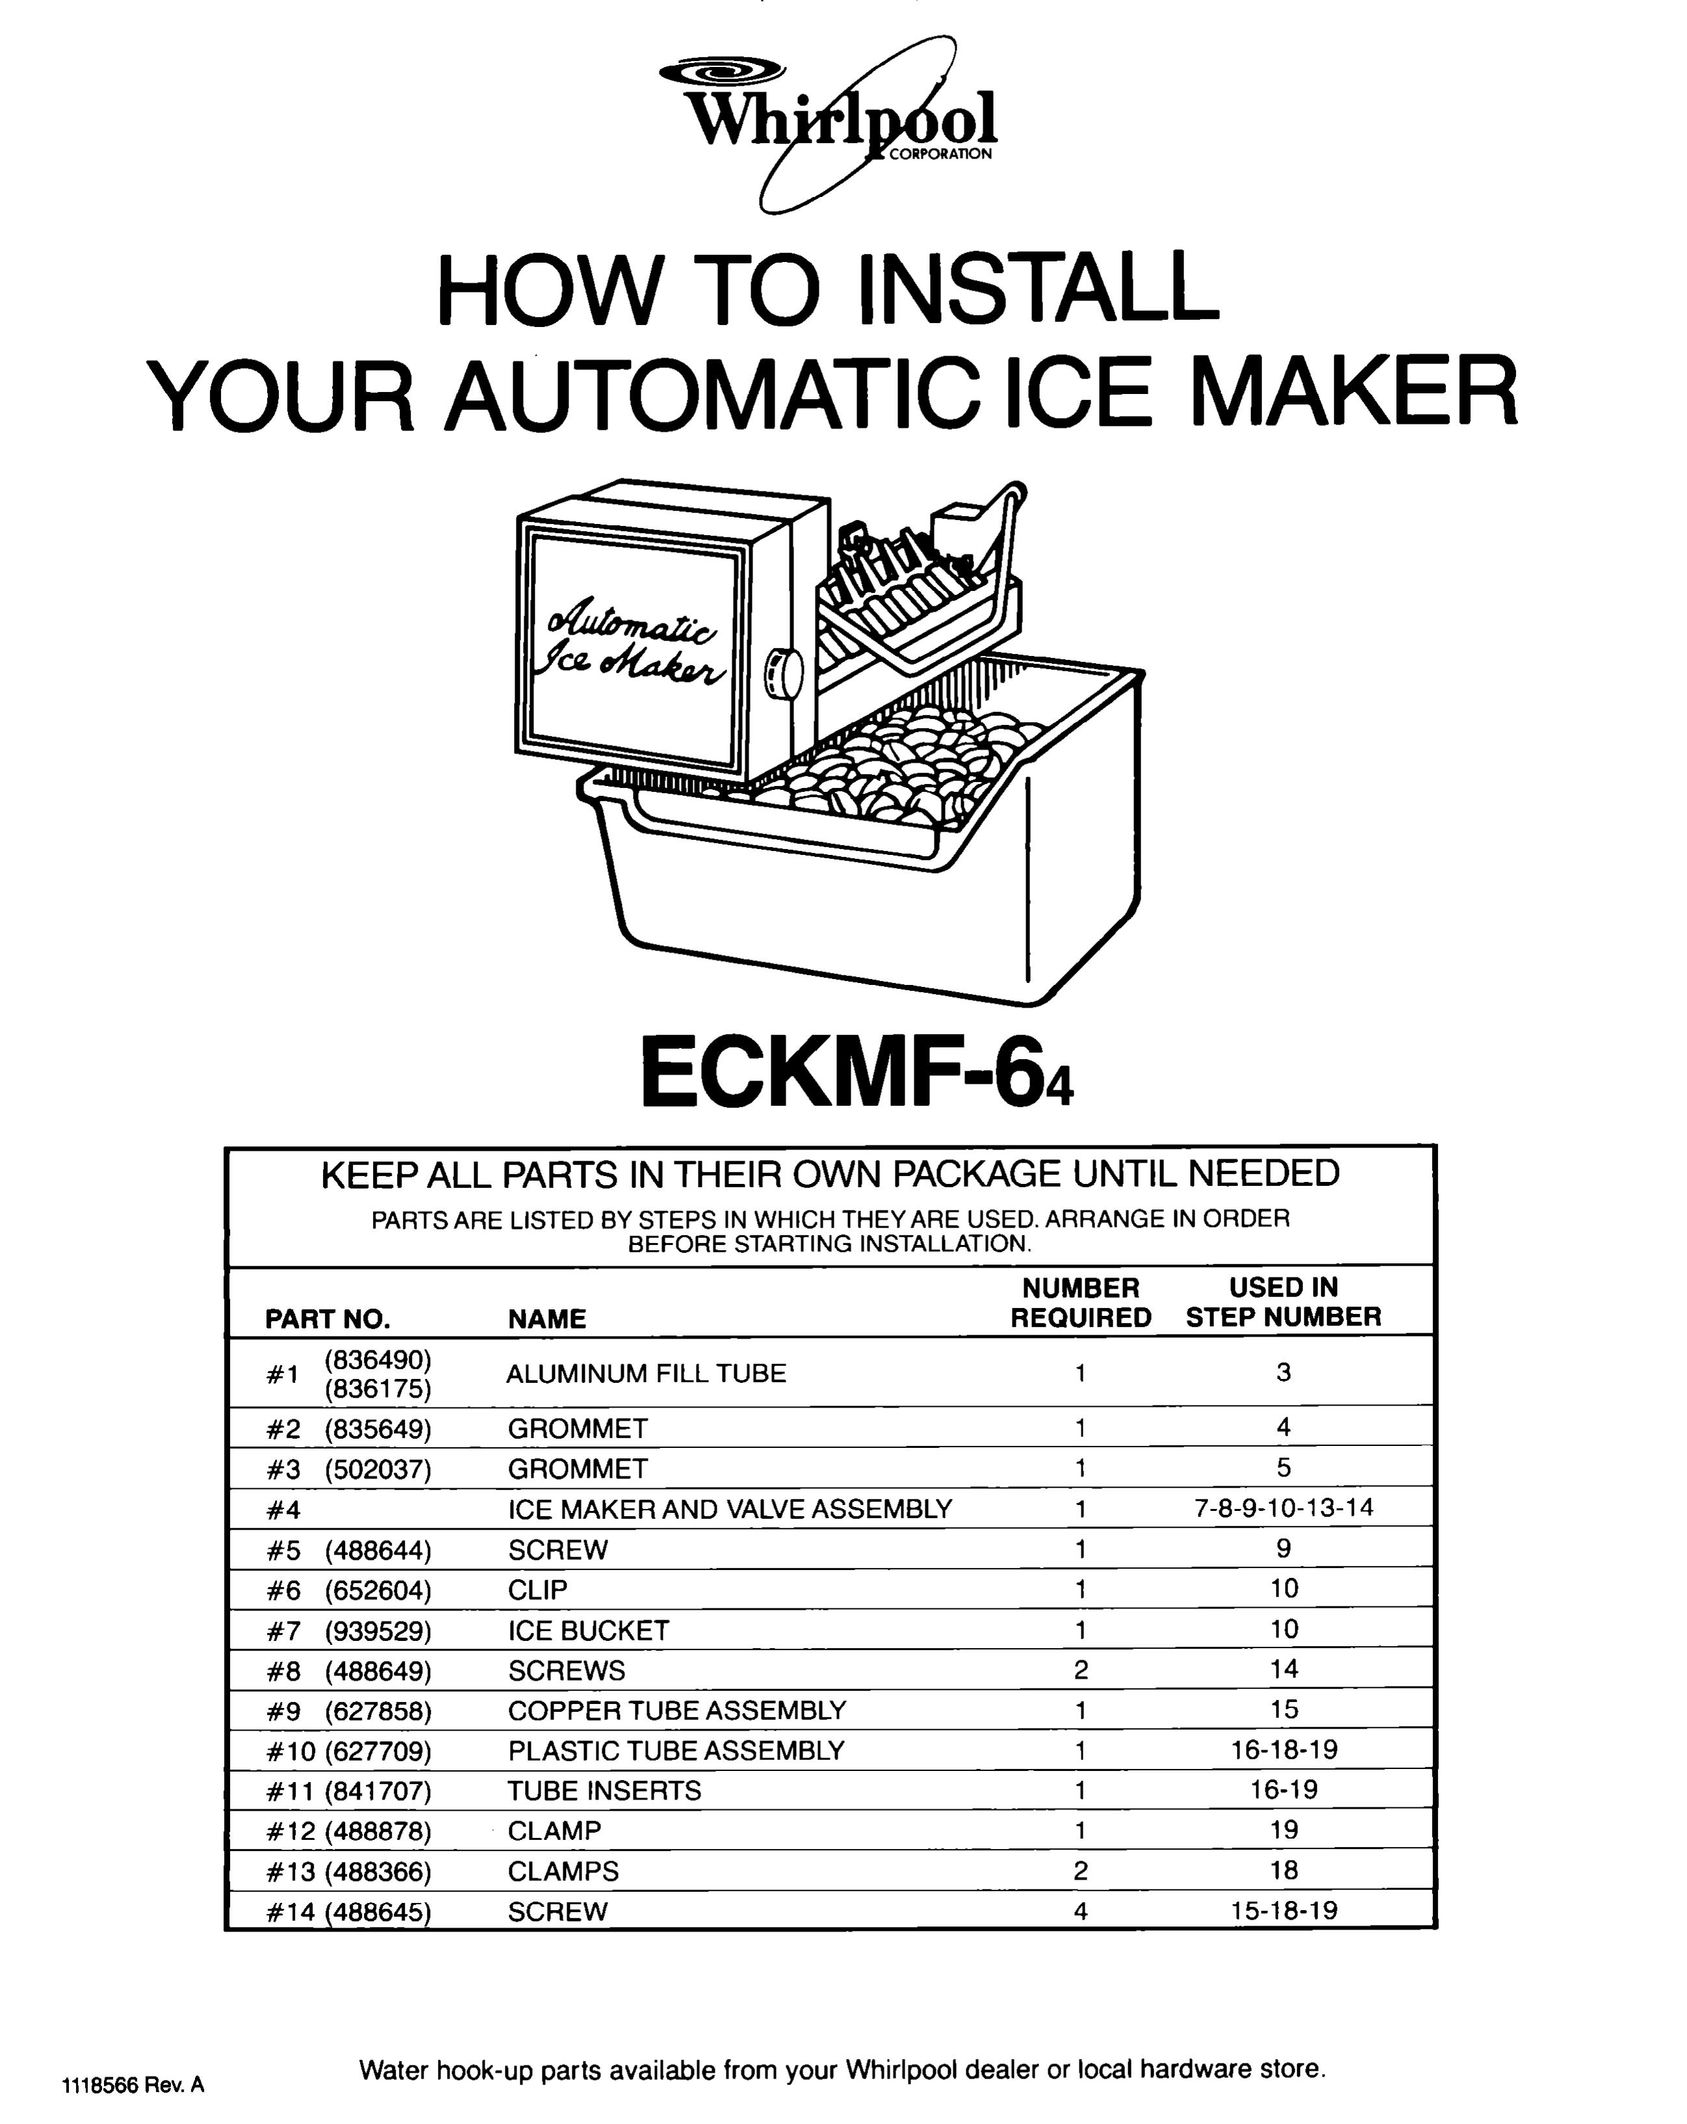 Whirlpool ECKMF-64 Ice Maker User Manual